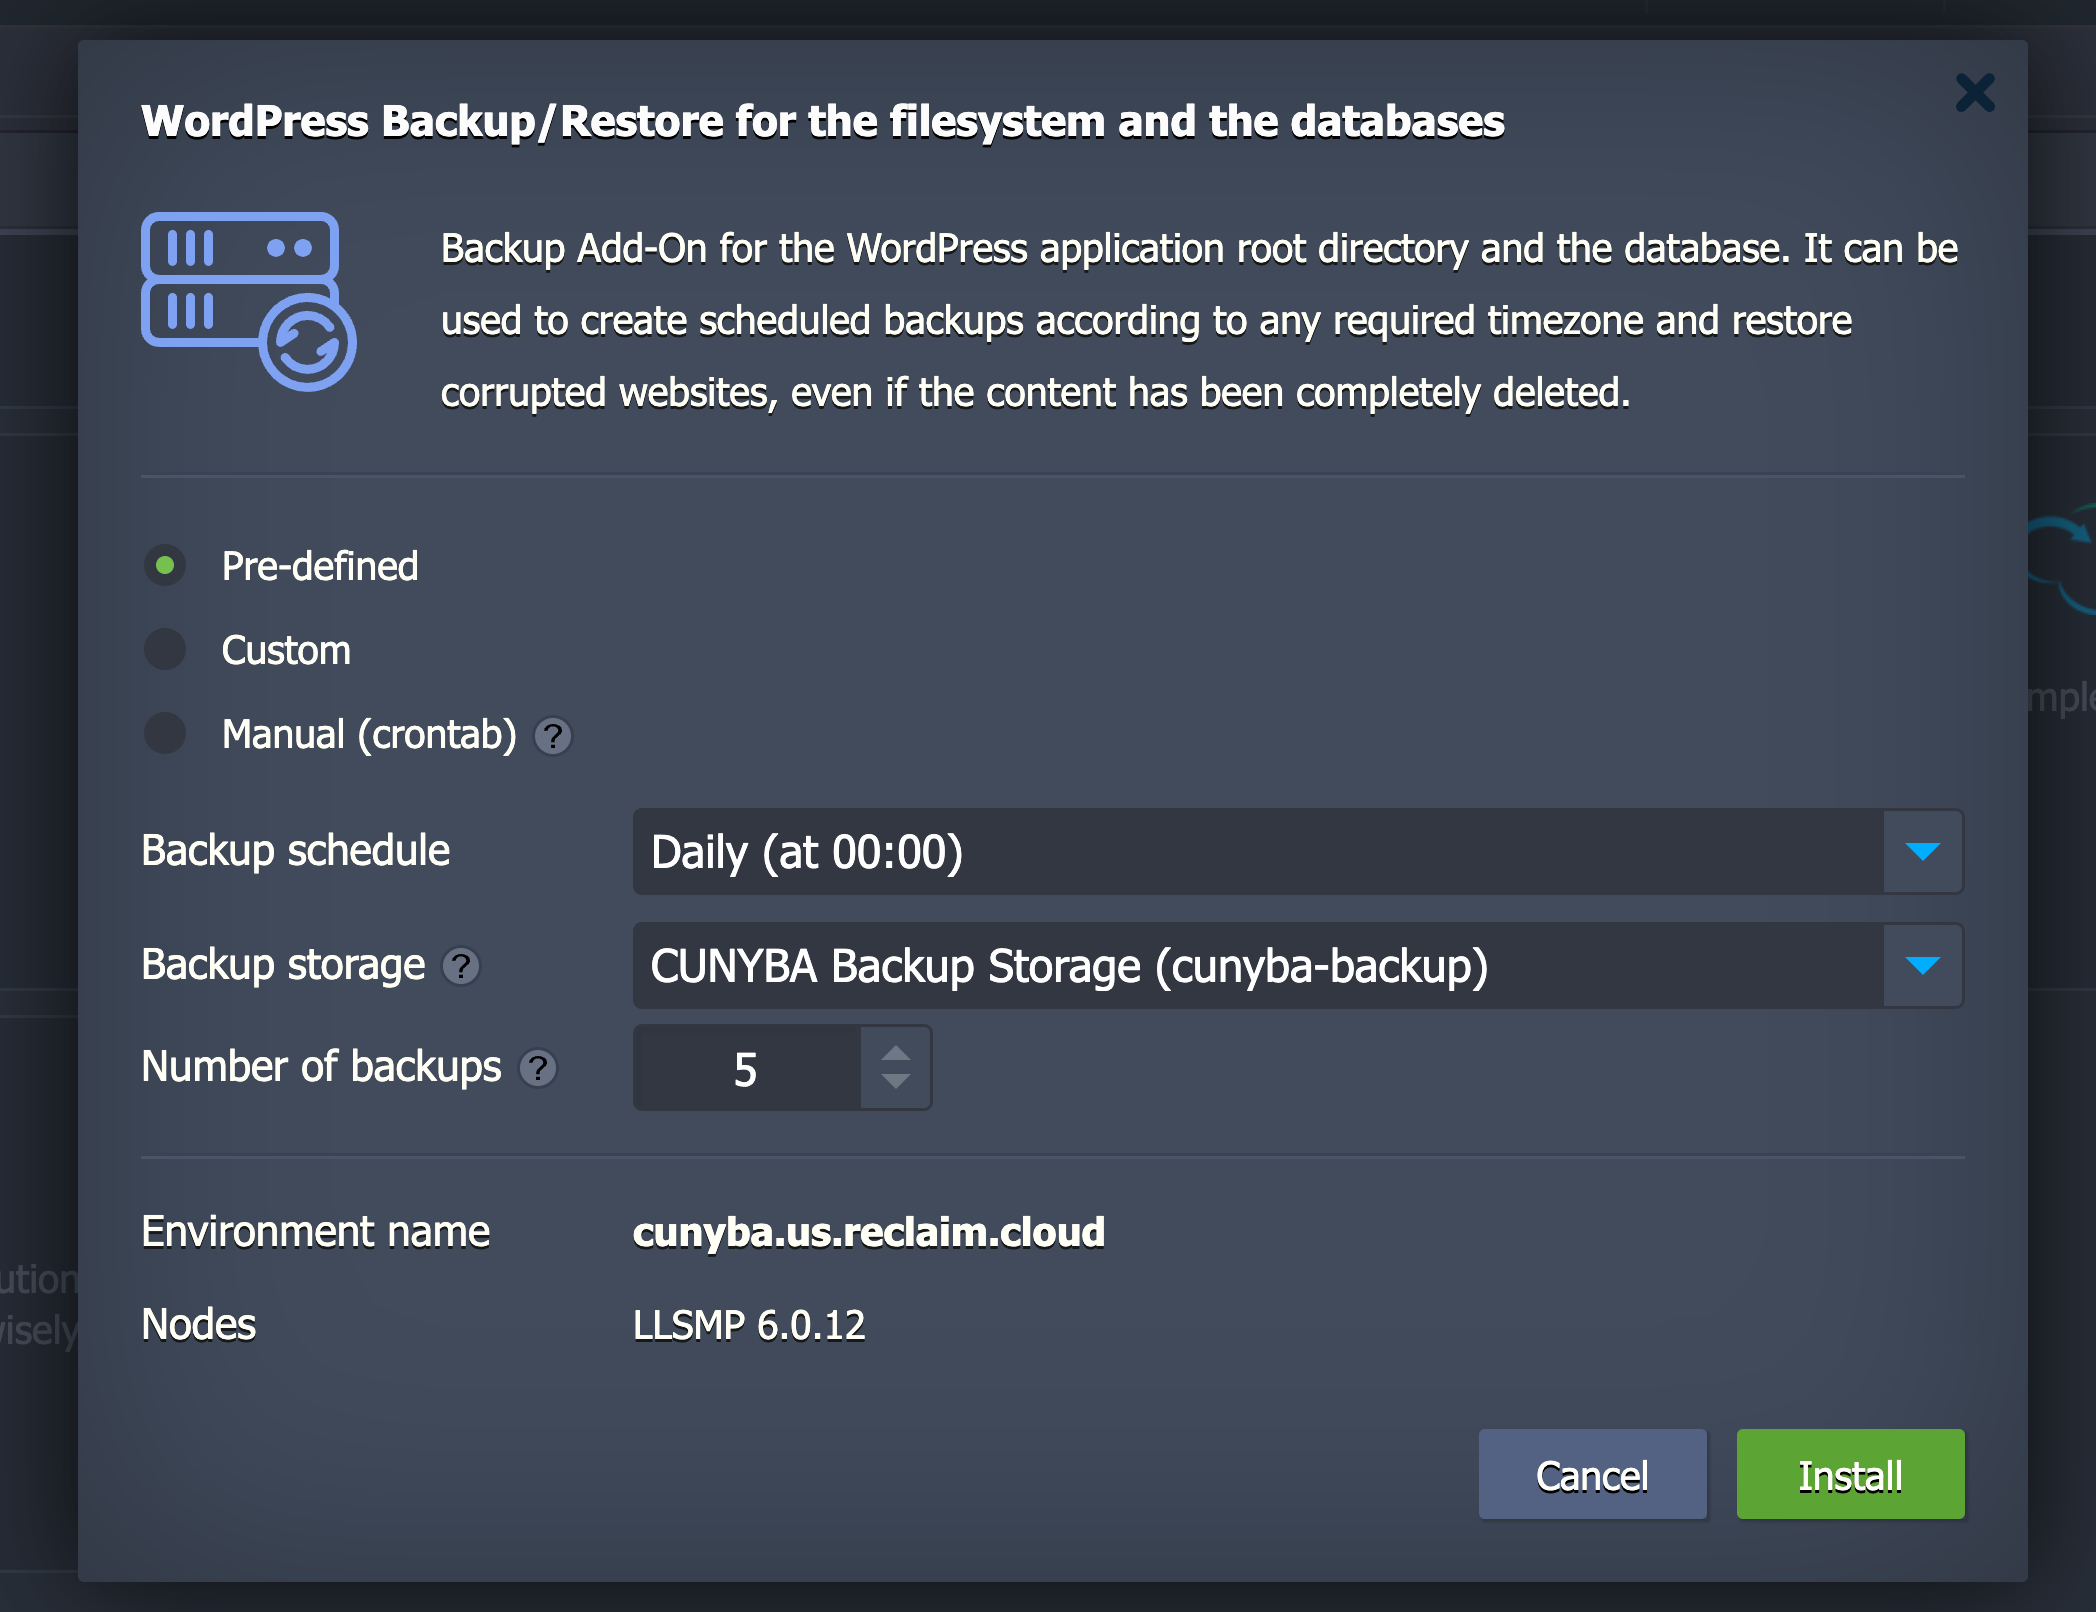 Screenshot of Reclaim Cloud WordPress backup server options dialogue box